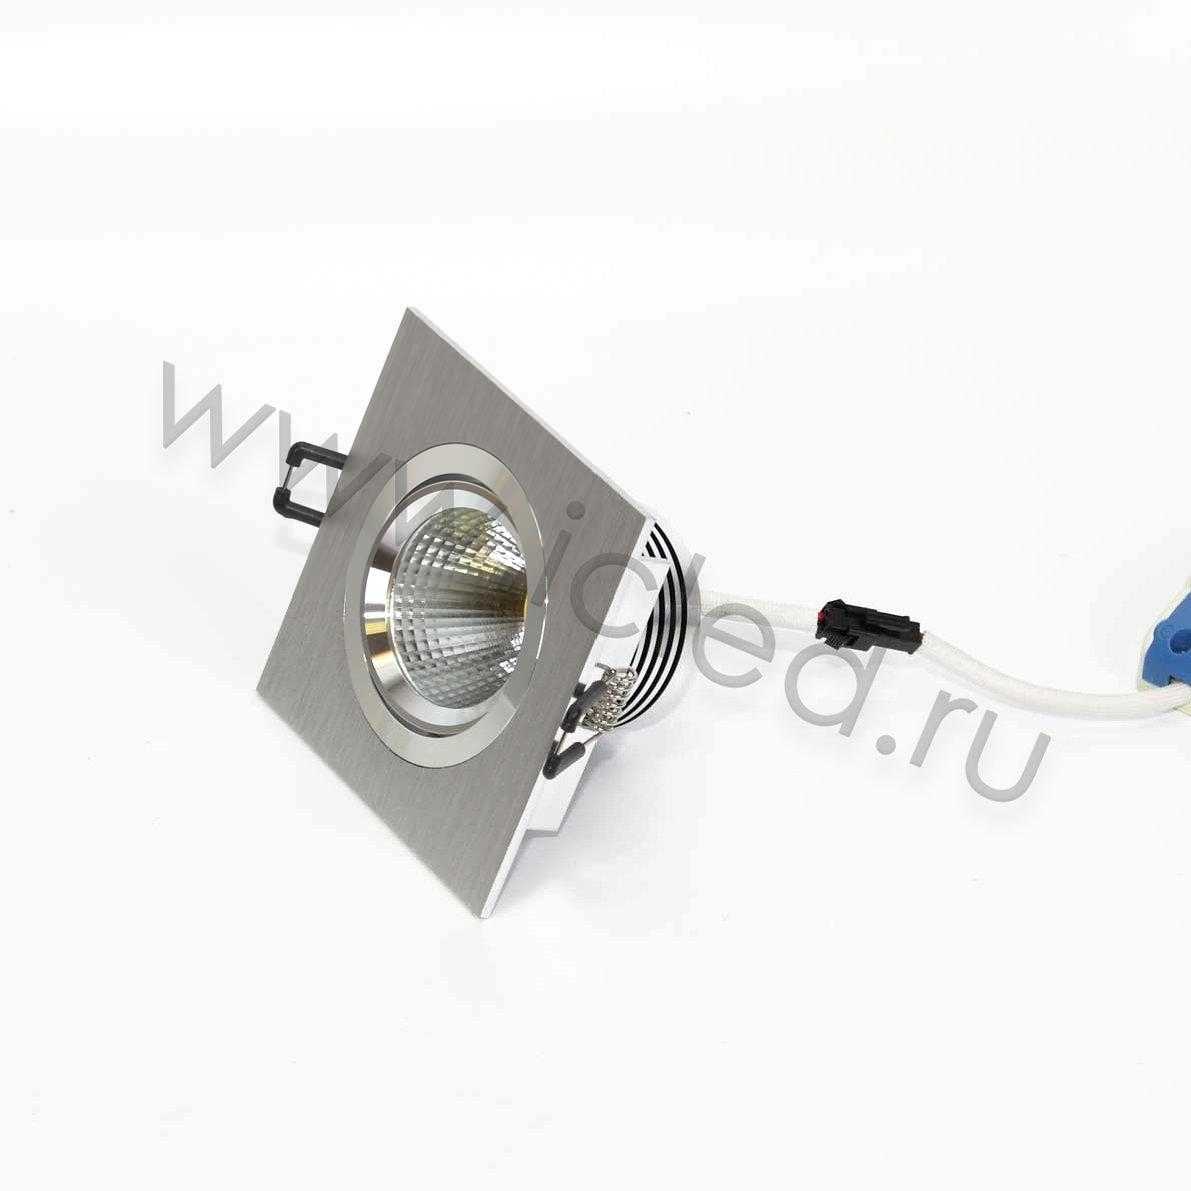 Светодиодный светильник встраиваемый 98.1 series silver housing BW81 (5W,220V,day white)